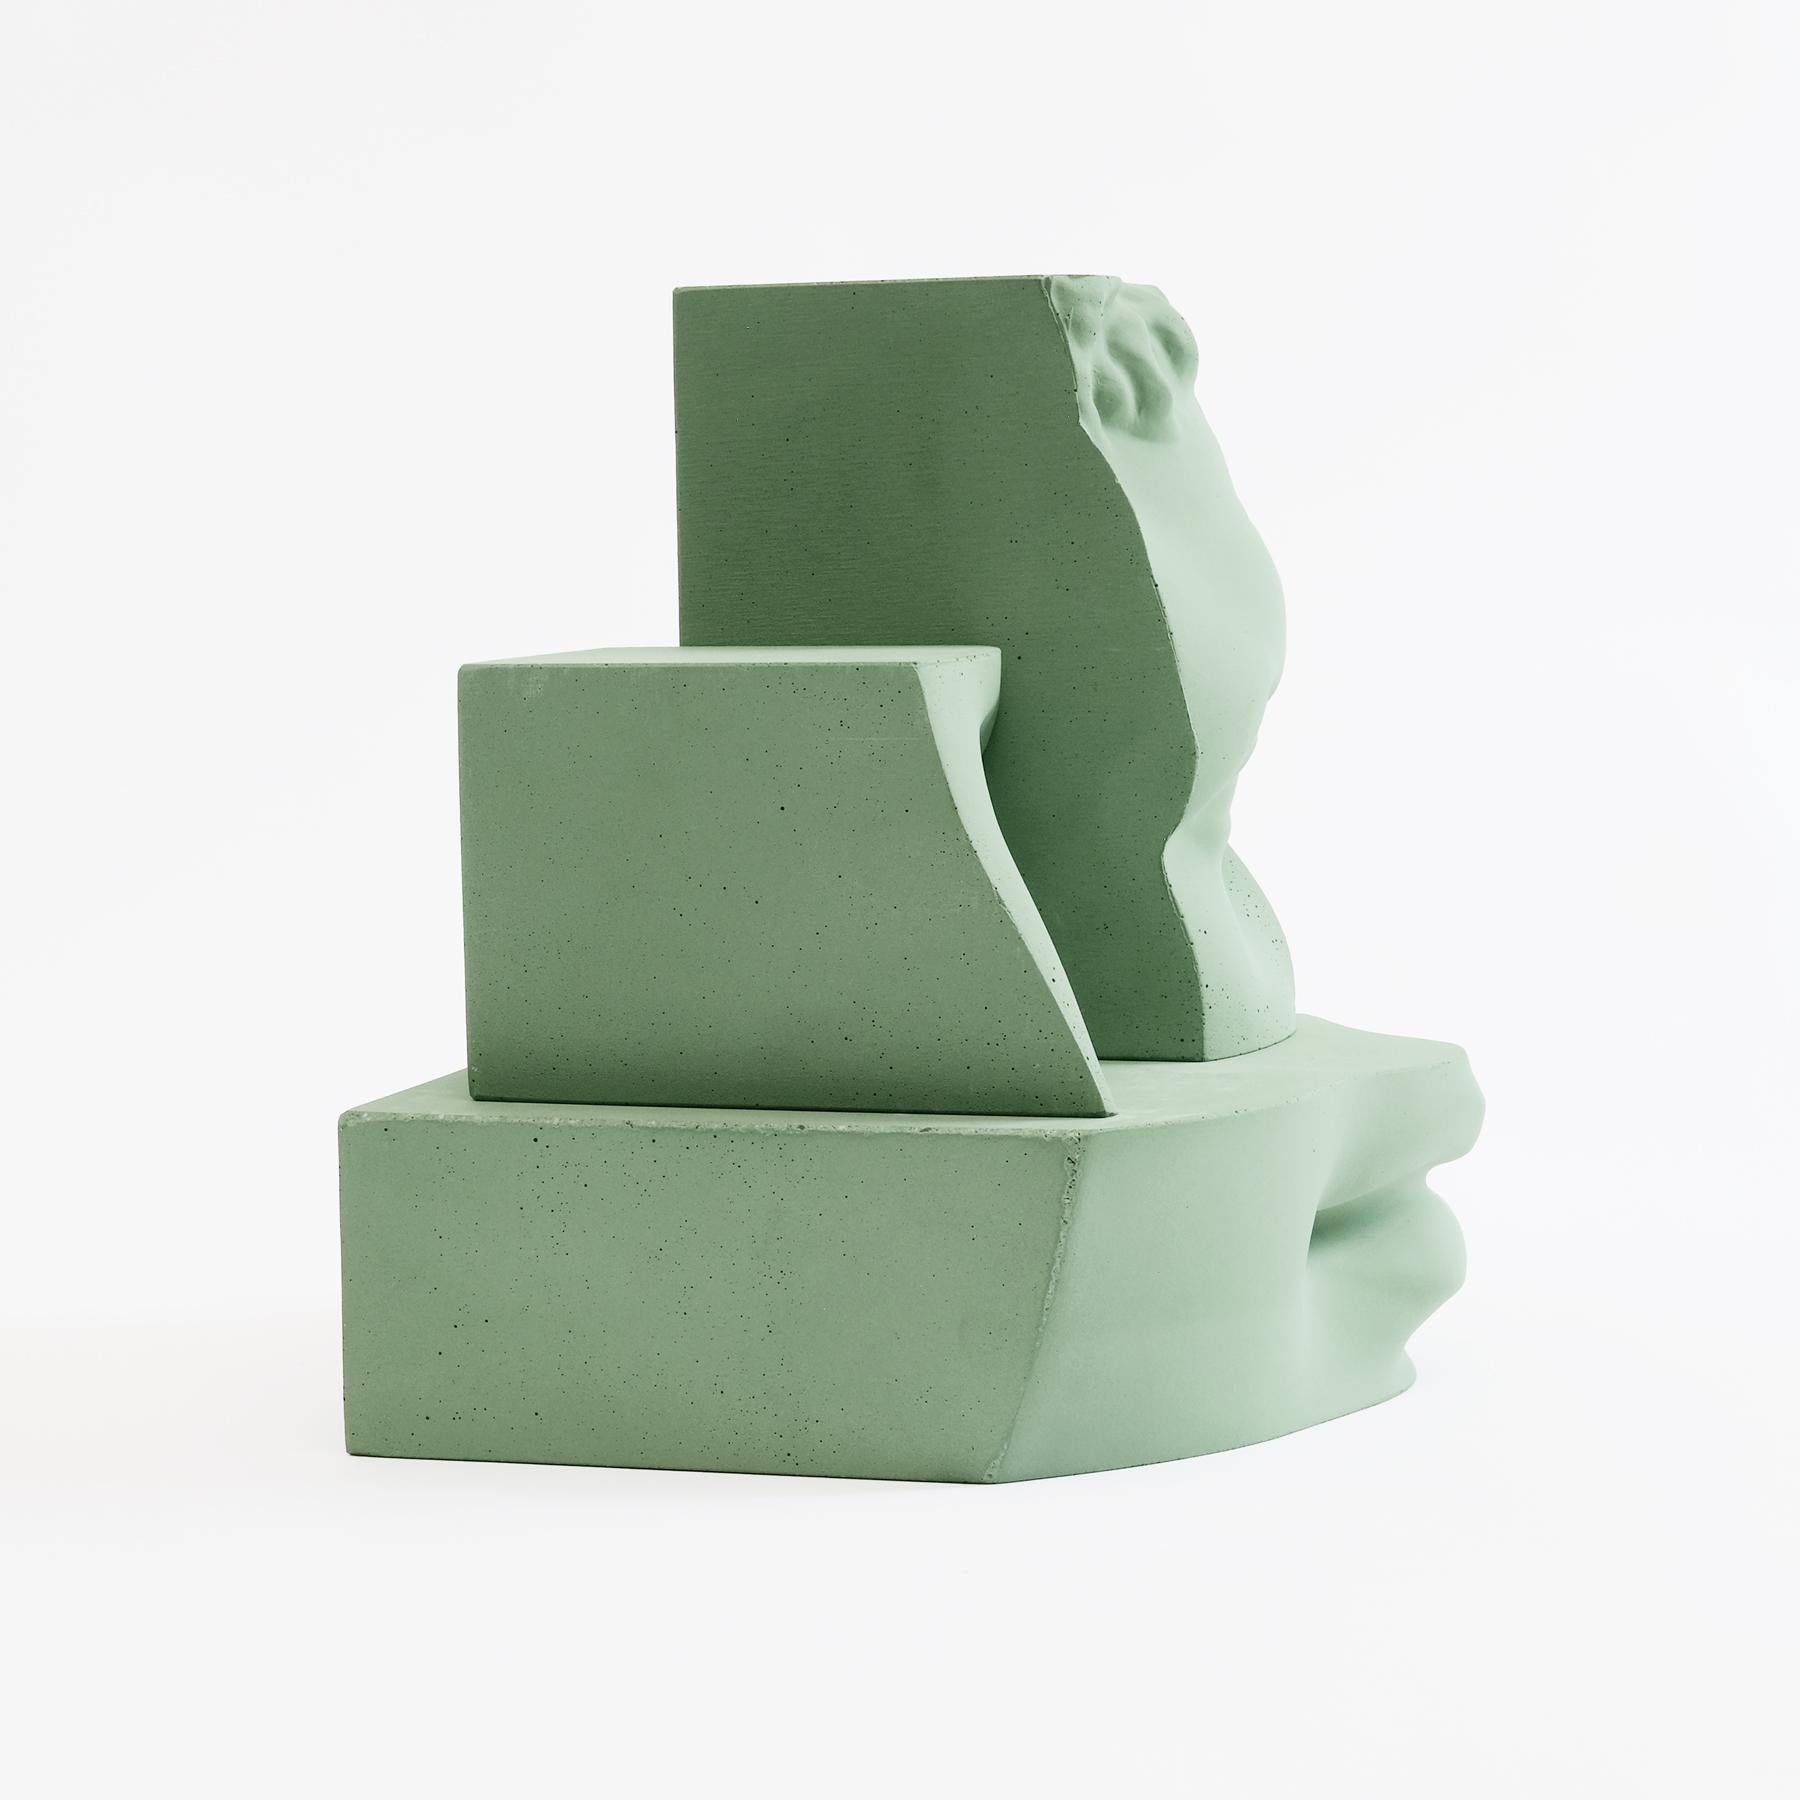 Hermes - Mint Green - Design Sculpture Paolo Giordano Concrete Cement Cast For Sale 1